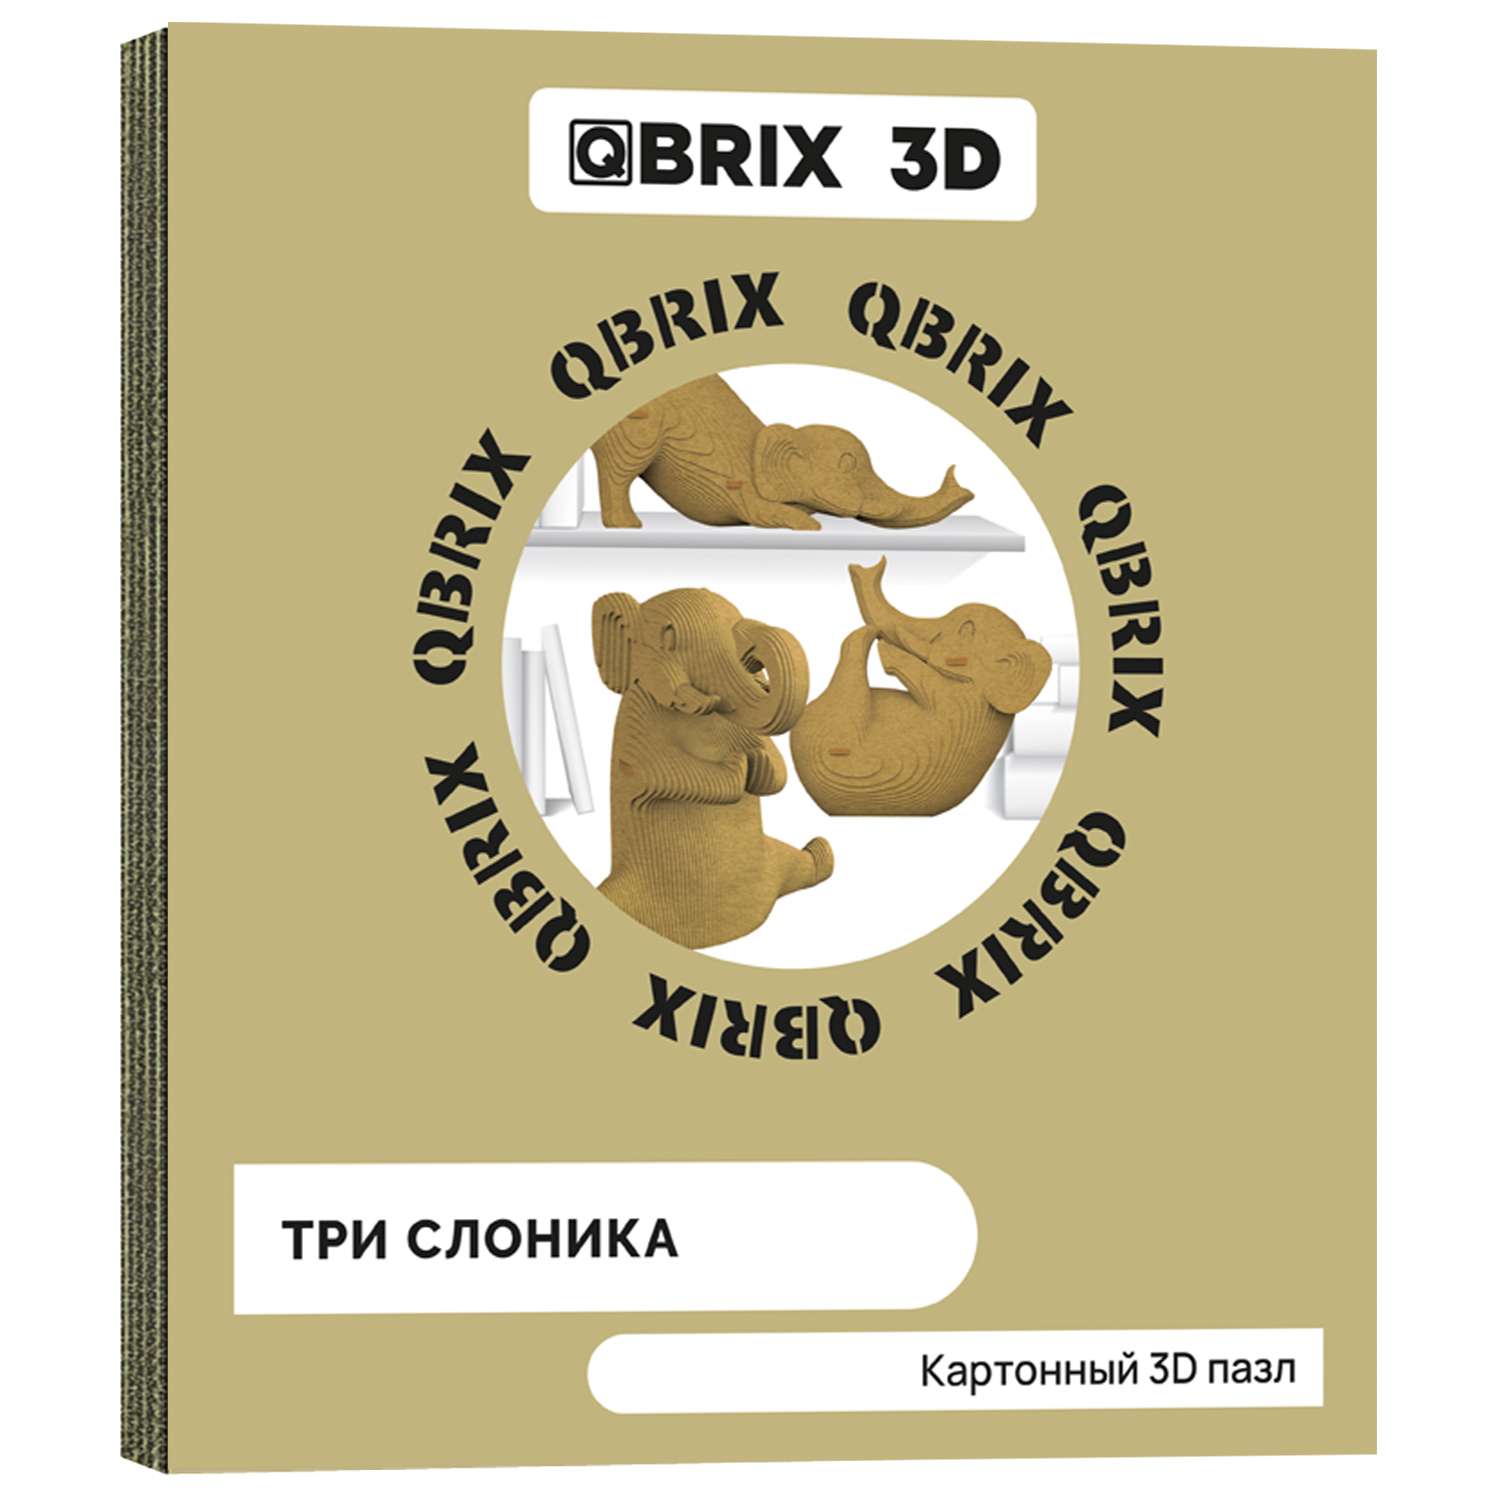 Конструктор QBRIX 3D картонный Три слоника 20035 20035 - фото 1